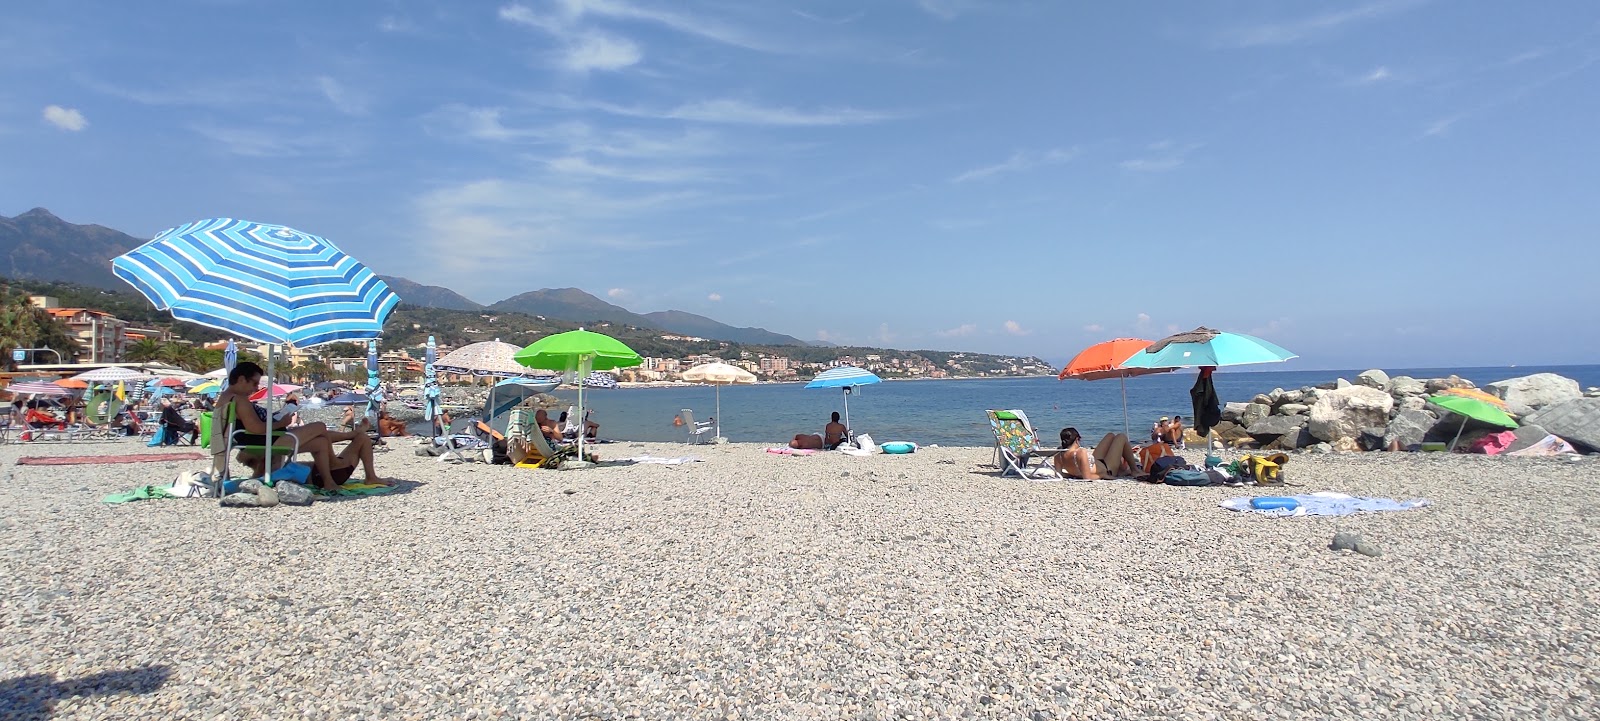 Spiaggia Libera Carretta Cogoleto'in fotoğrafı geniş plaj ile birlikte